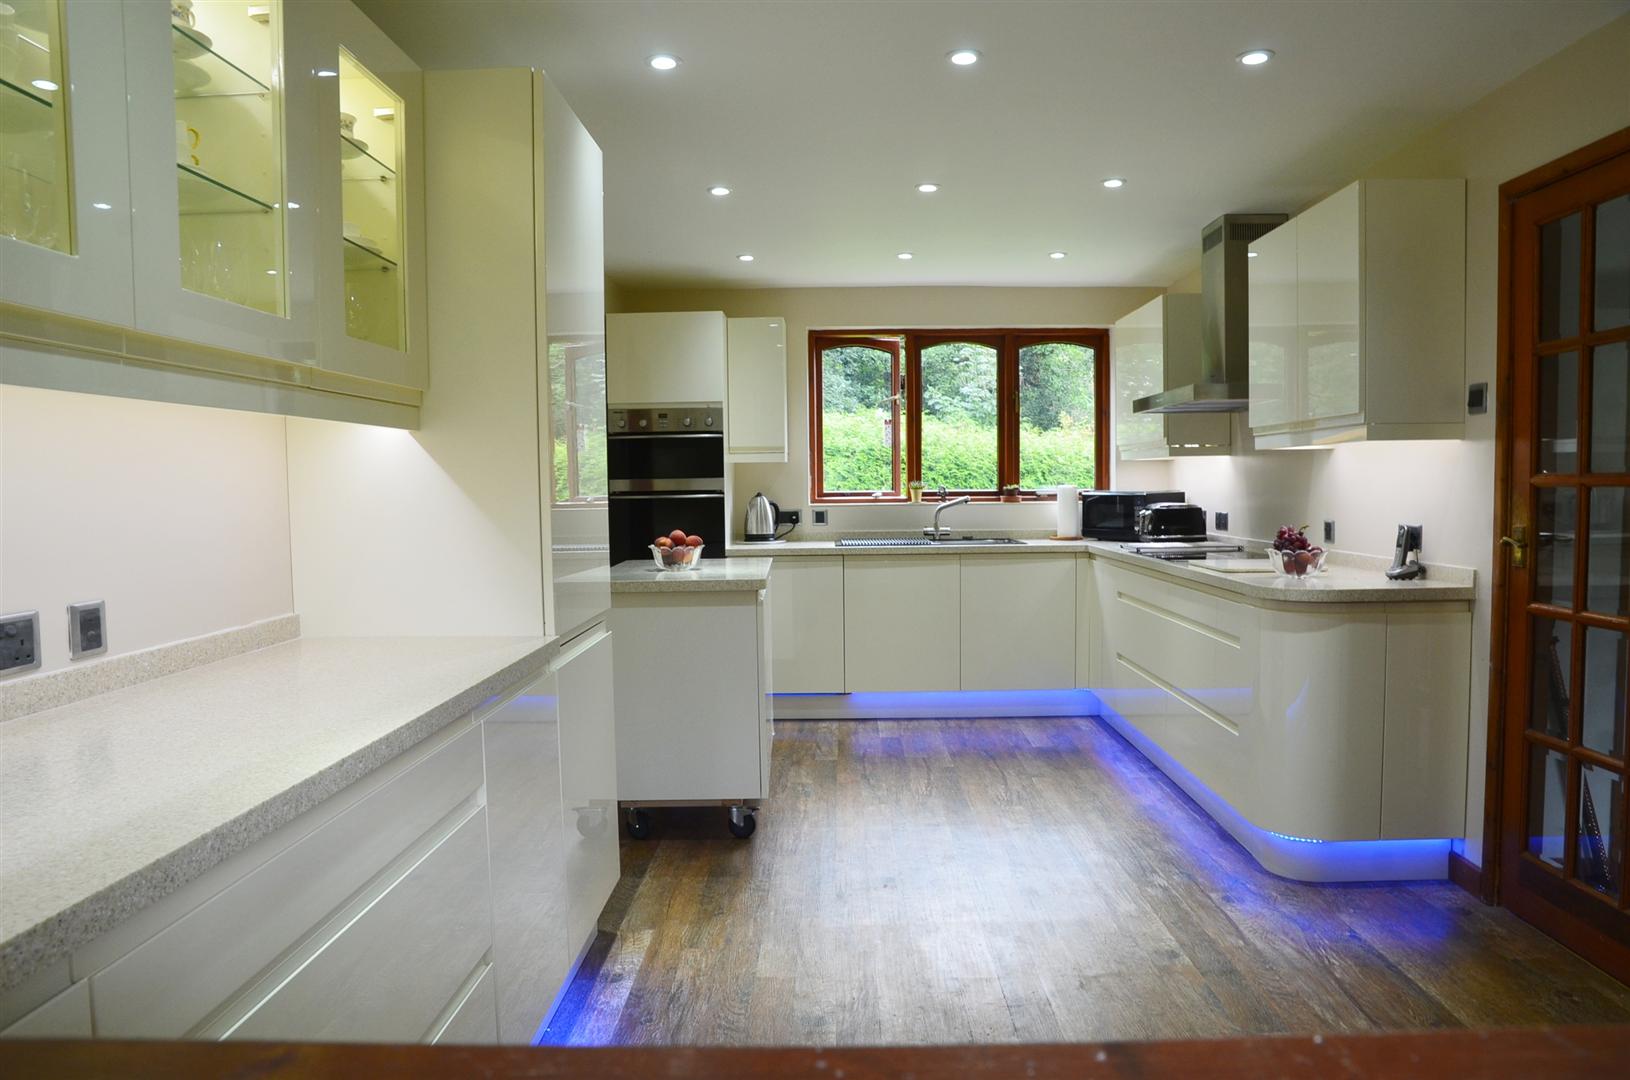 Led kitchen lighting 1000+ images about belysning on pinterest | long kitchen, led tape and PGLCMKL